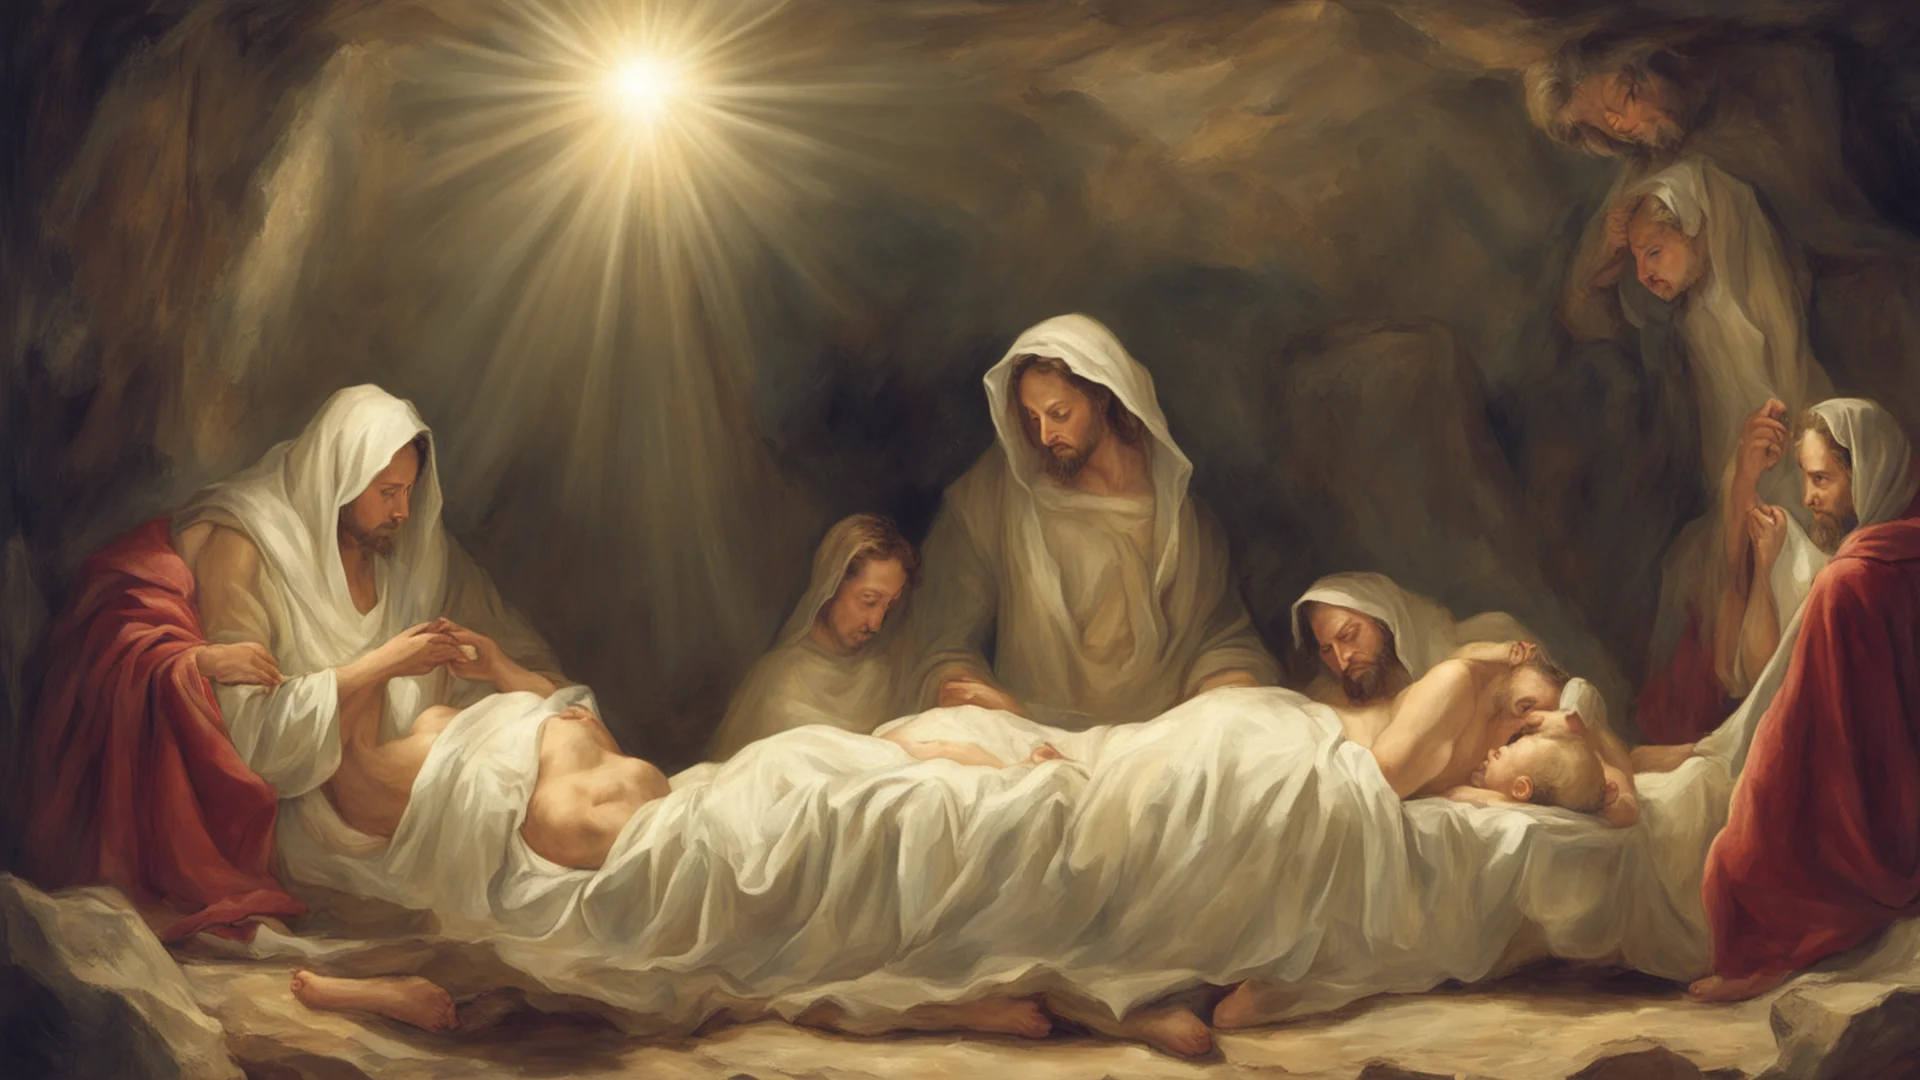 birth of jesus christ amazing awesome portrait 2 wide